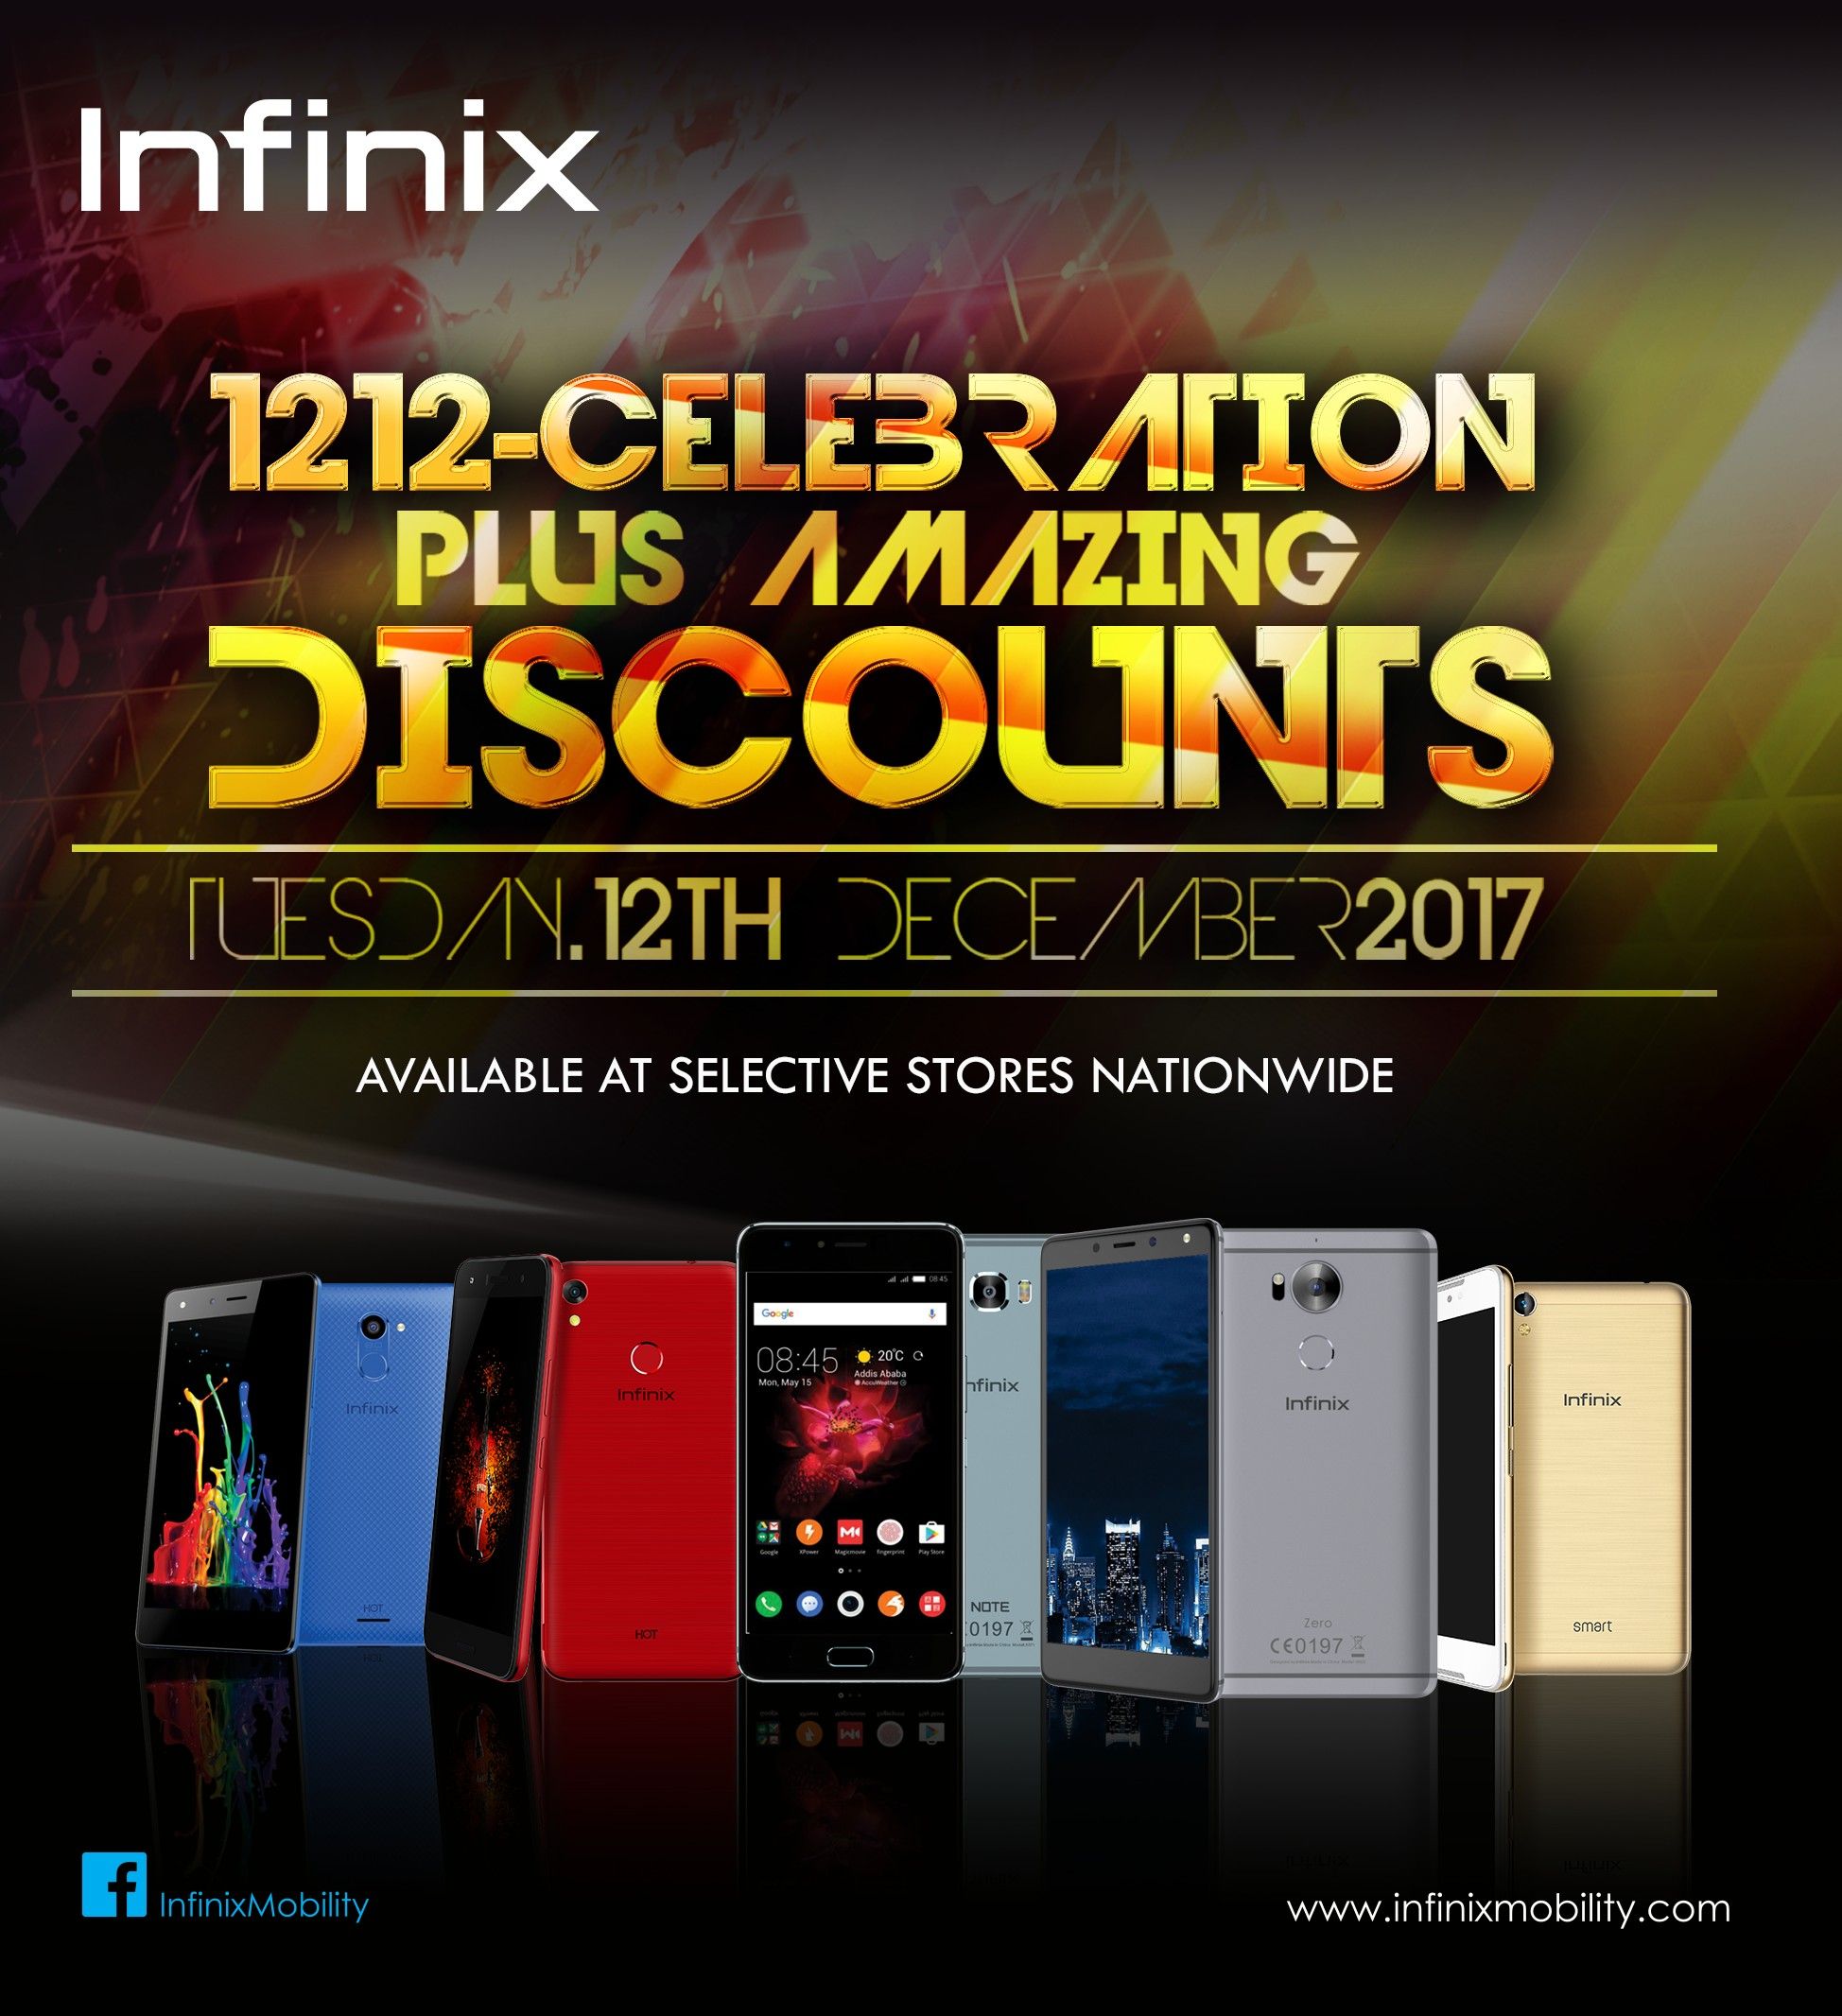 Infinix 1212 Celebration